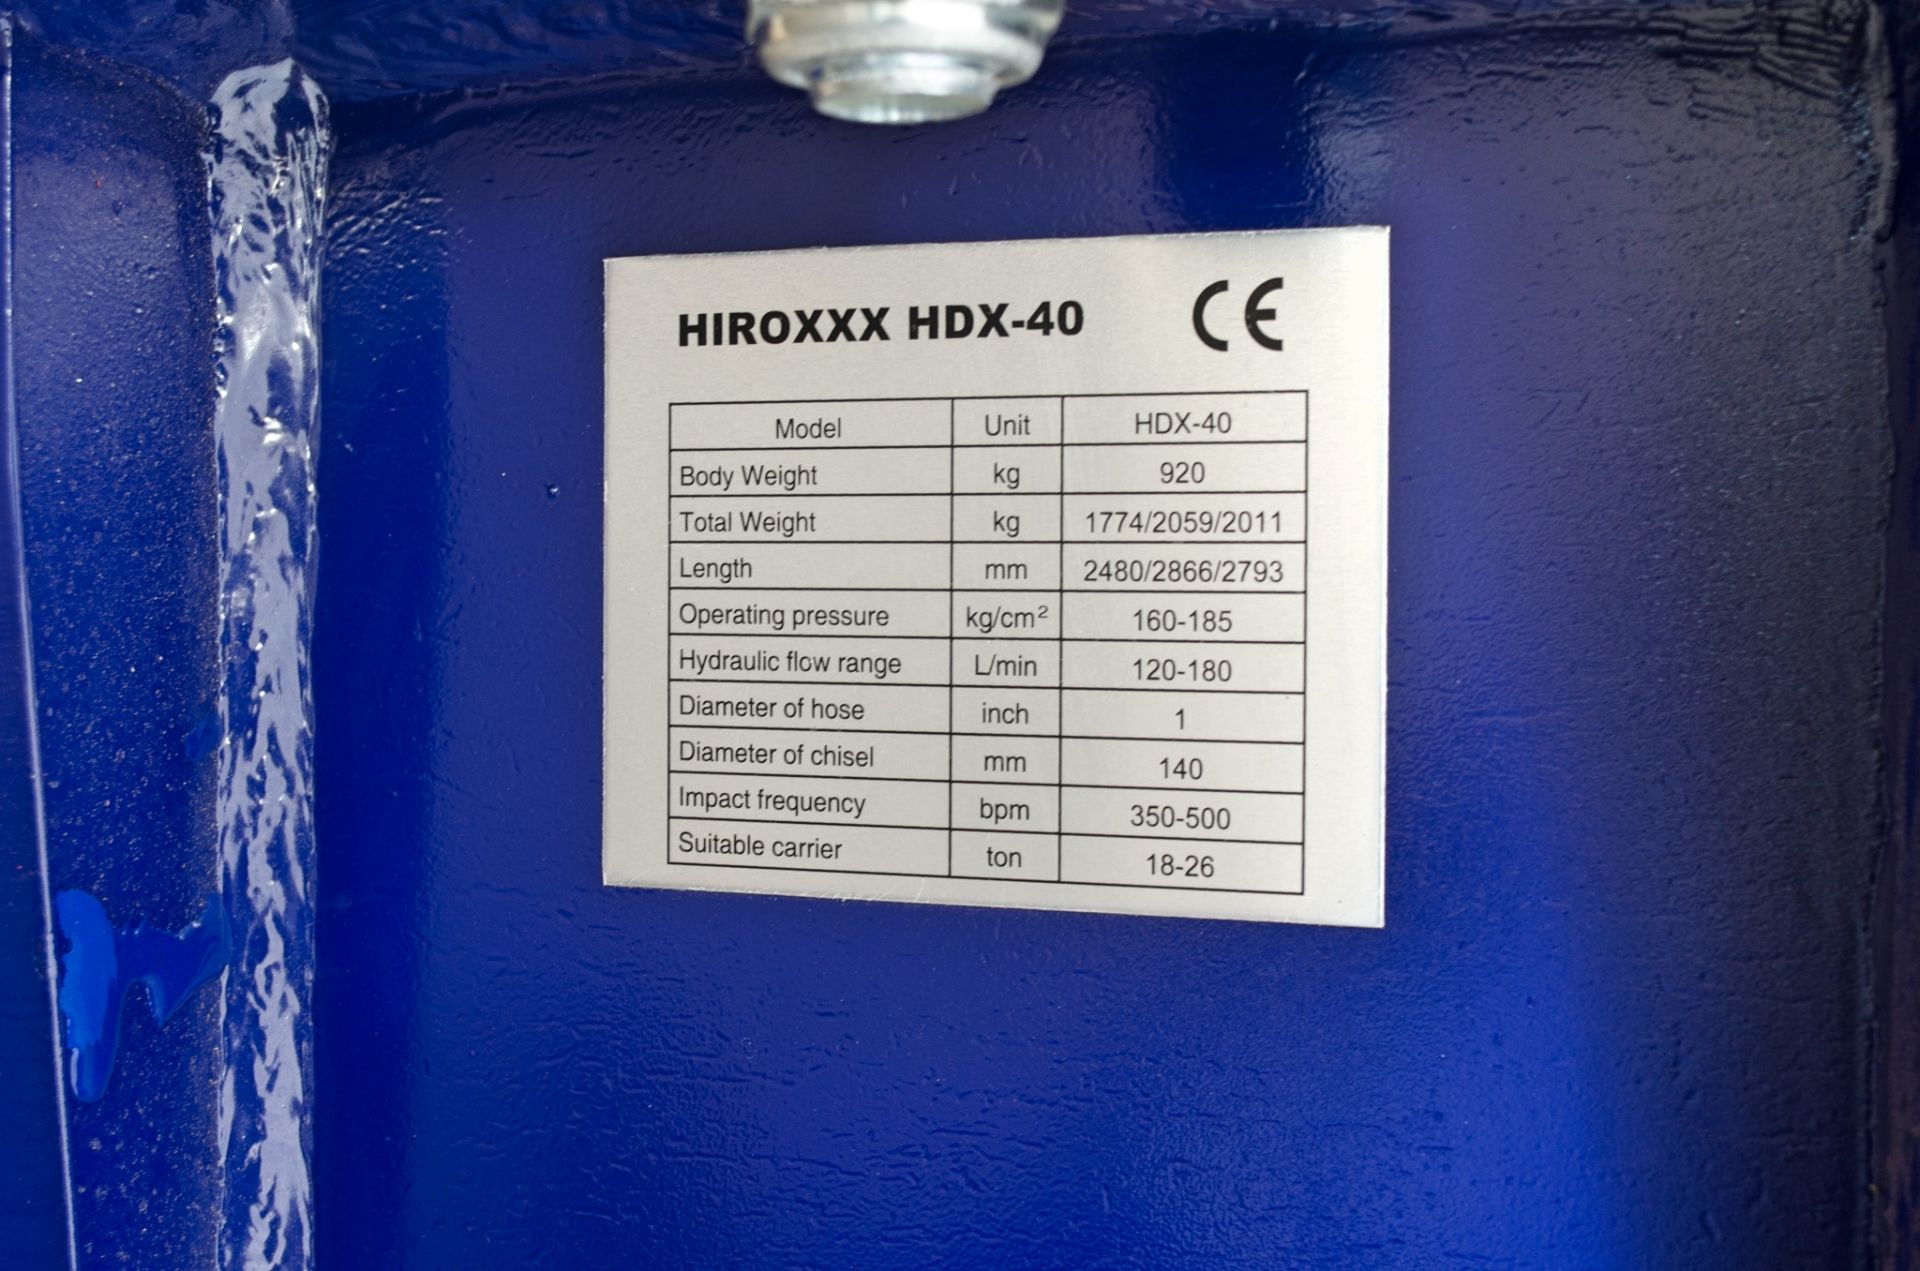 Hirox HDX-40 hydraulic breaker to suit 18 to 26 tonne excavator c/w tool kit ** New & unused ** - Image 3 of 4